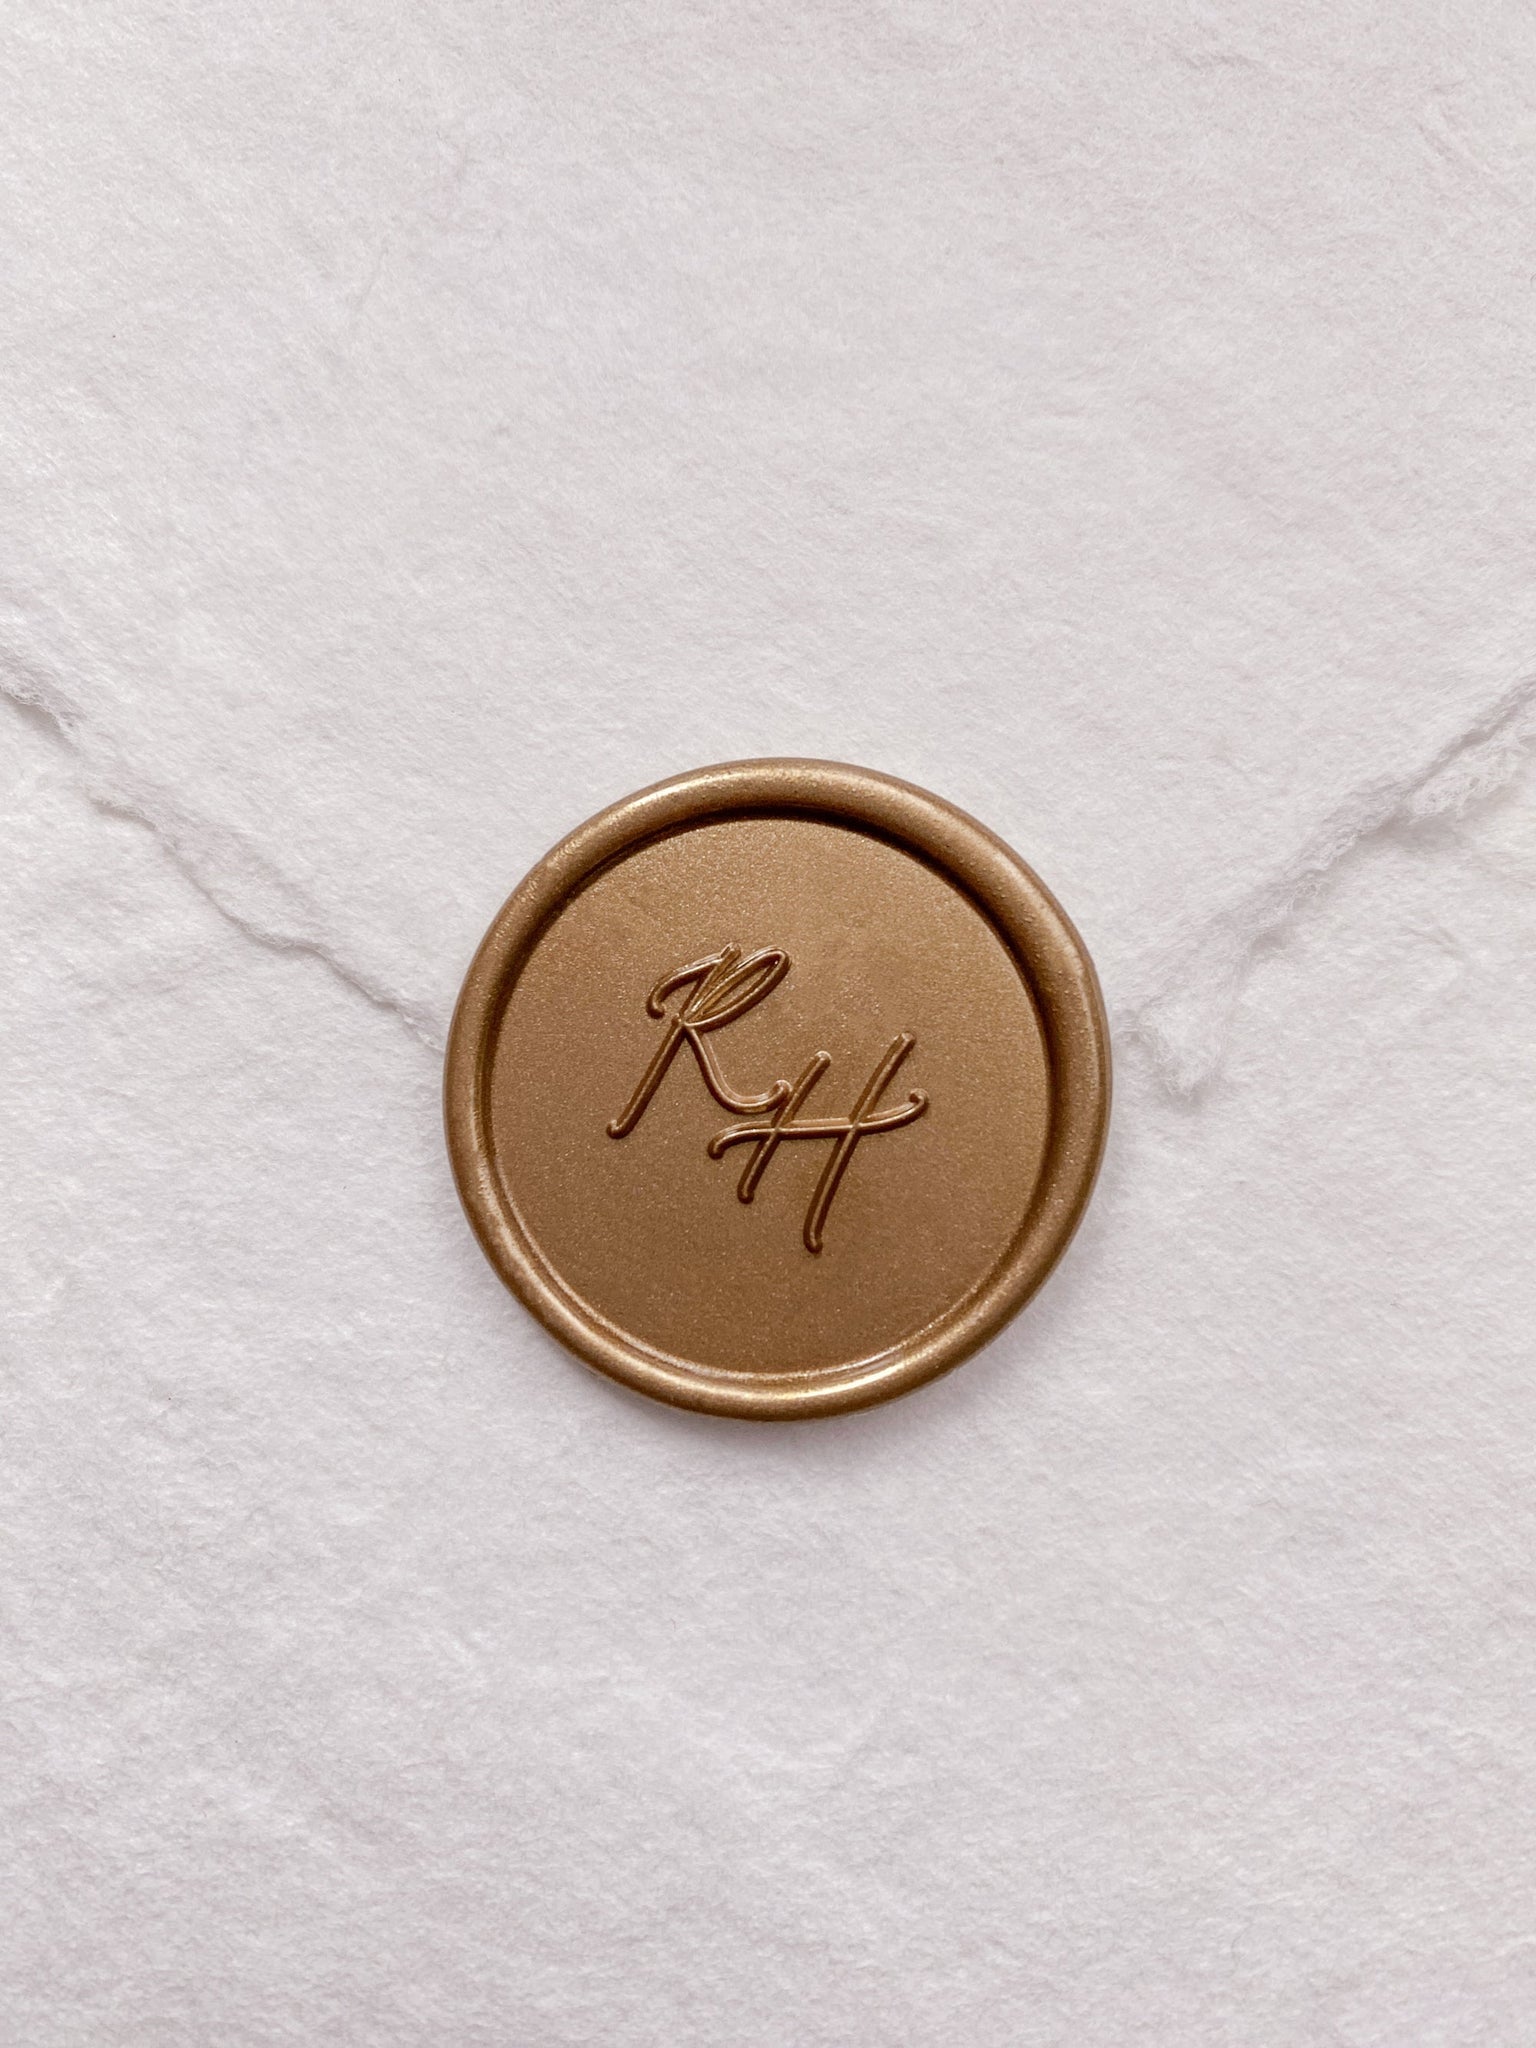 Calligraphy script monogram round wax seal in gold on handmade paper envelope